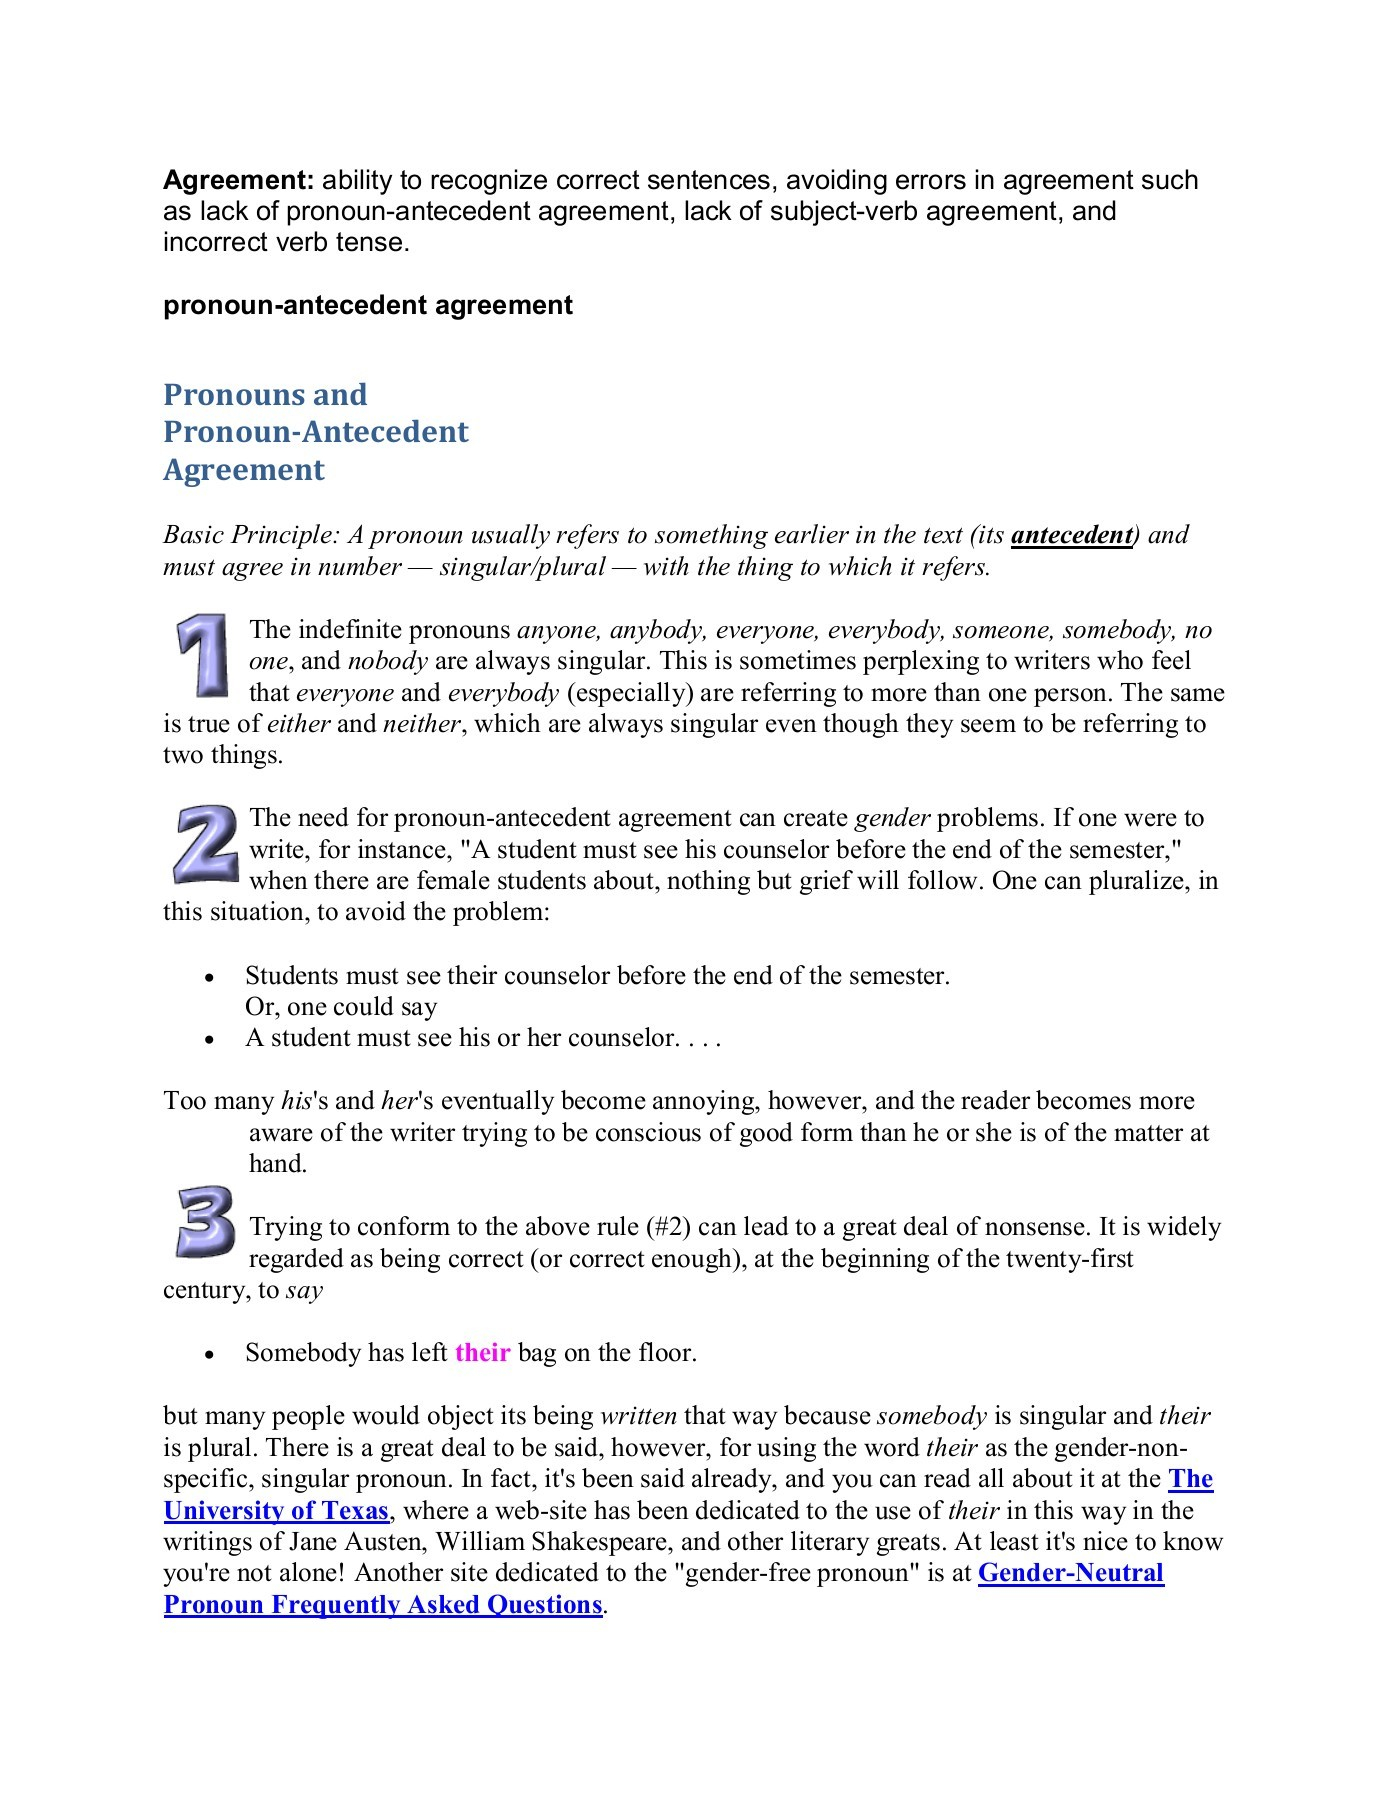 Correct Pronoun Antecedent Agreement Pronouns And Pronoun Antecedent Agreement Evergreenedu Pages 1